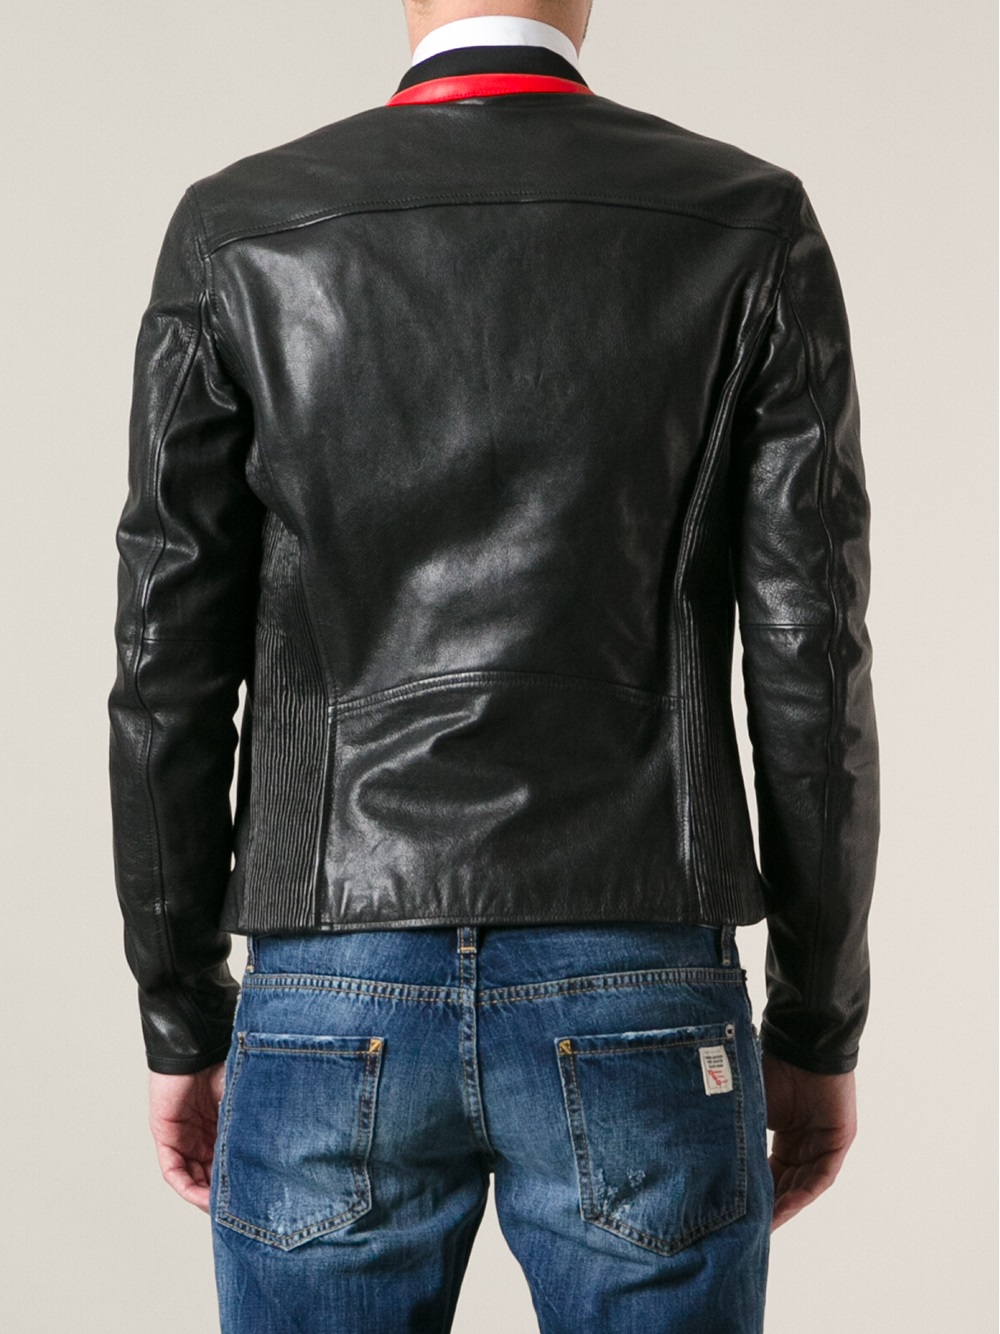 DSquared² Leather Jacket in Black for Men - Lyst